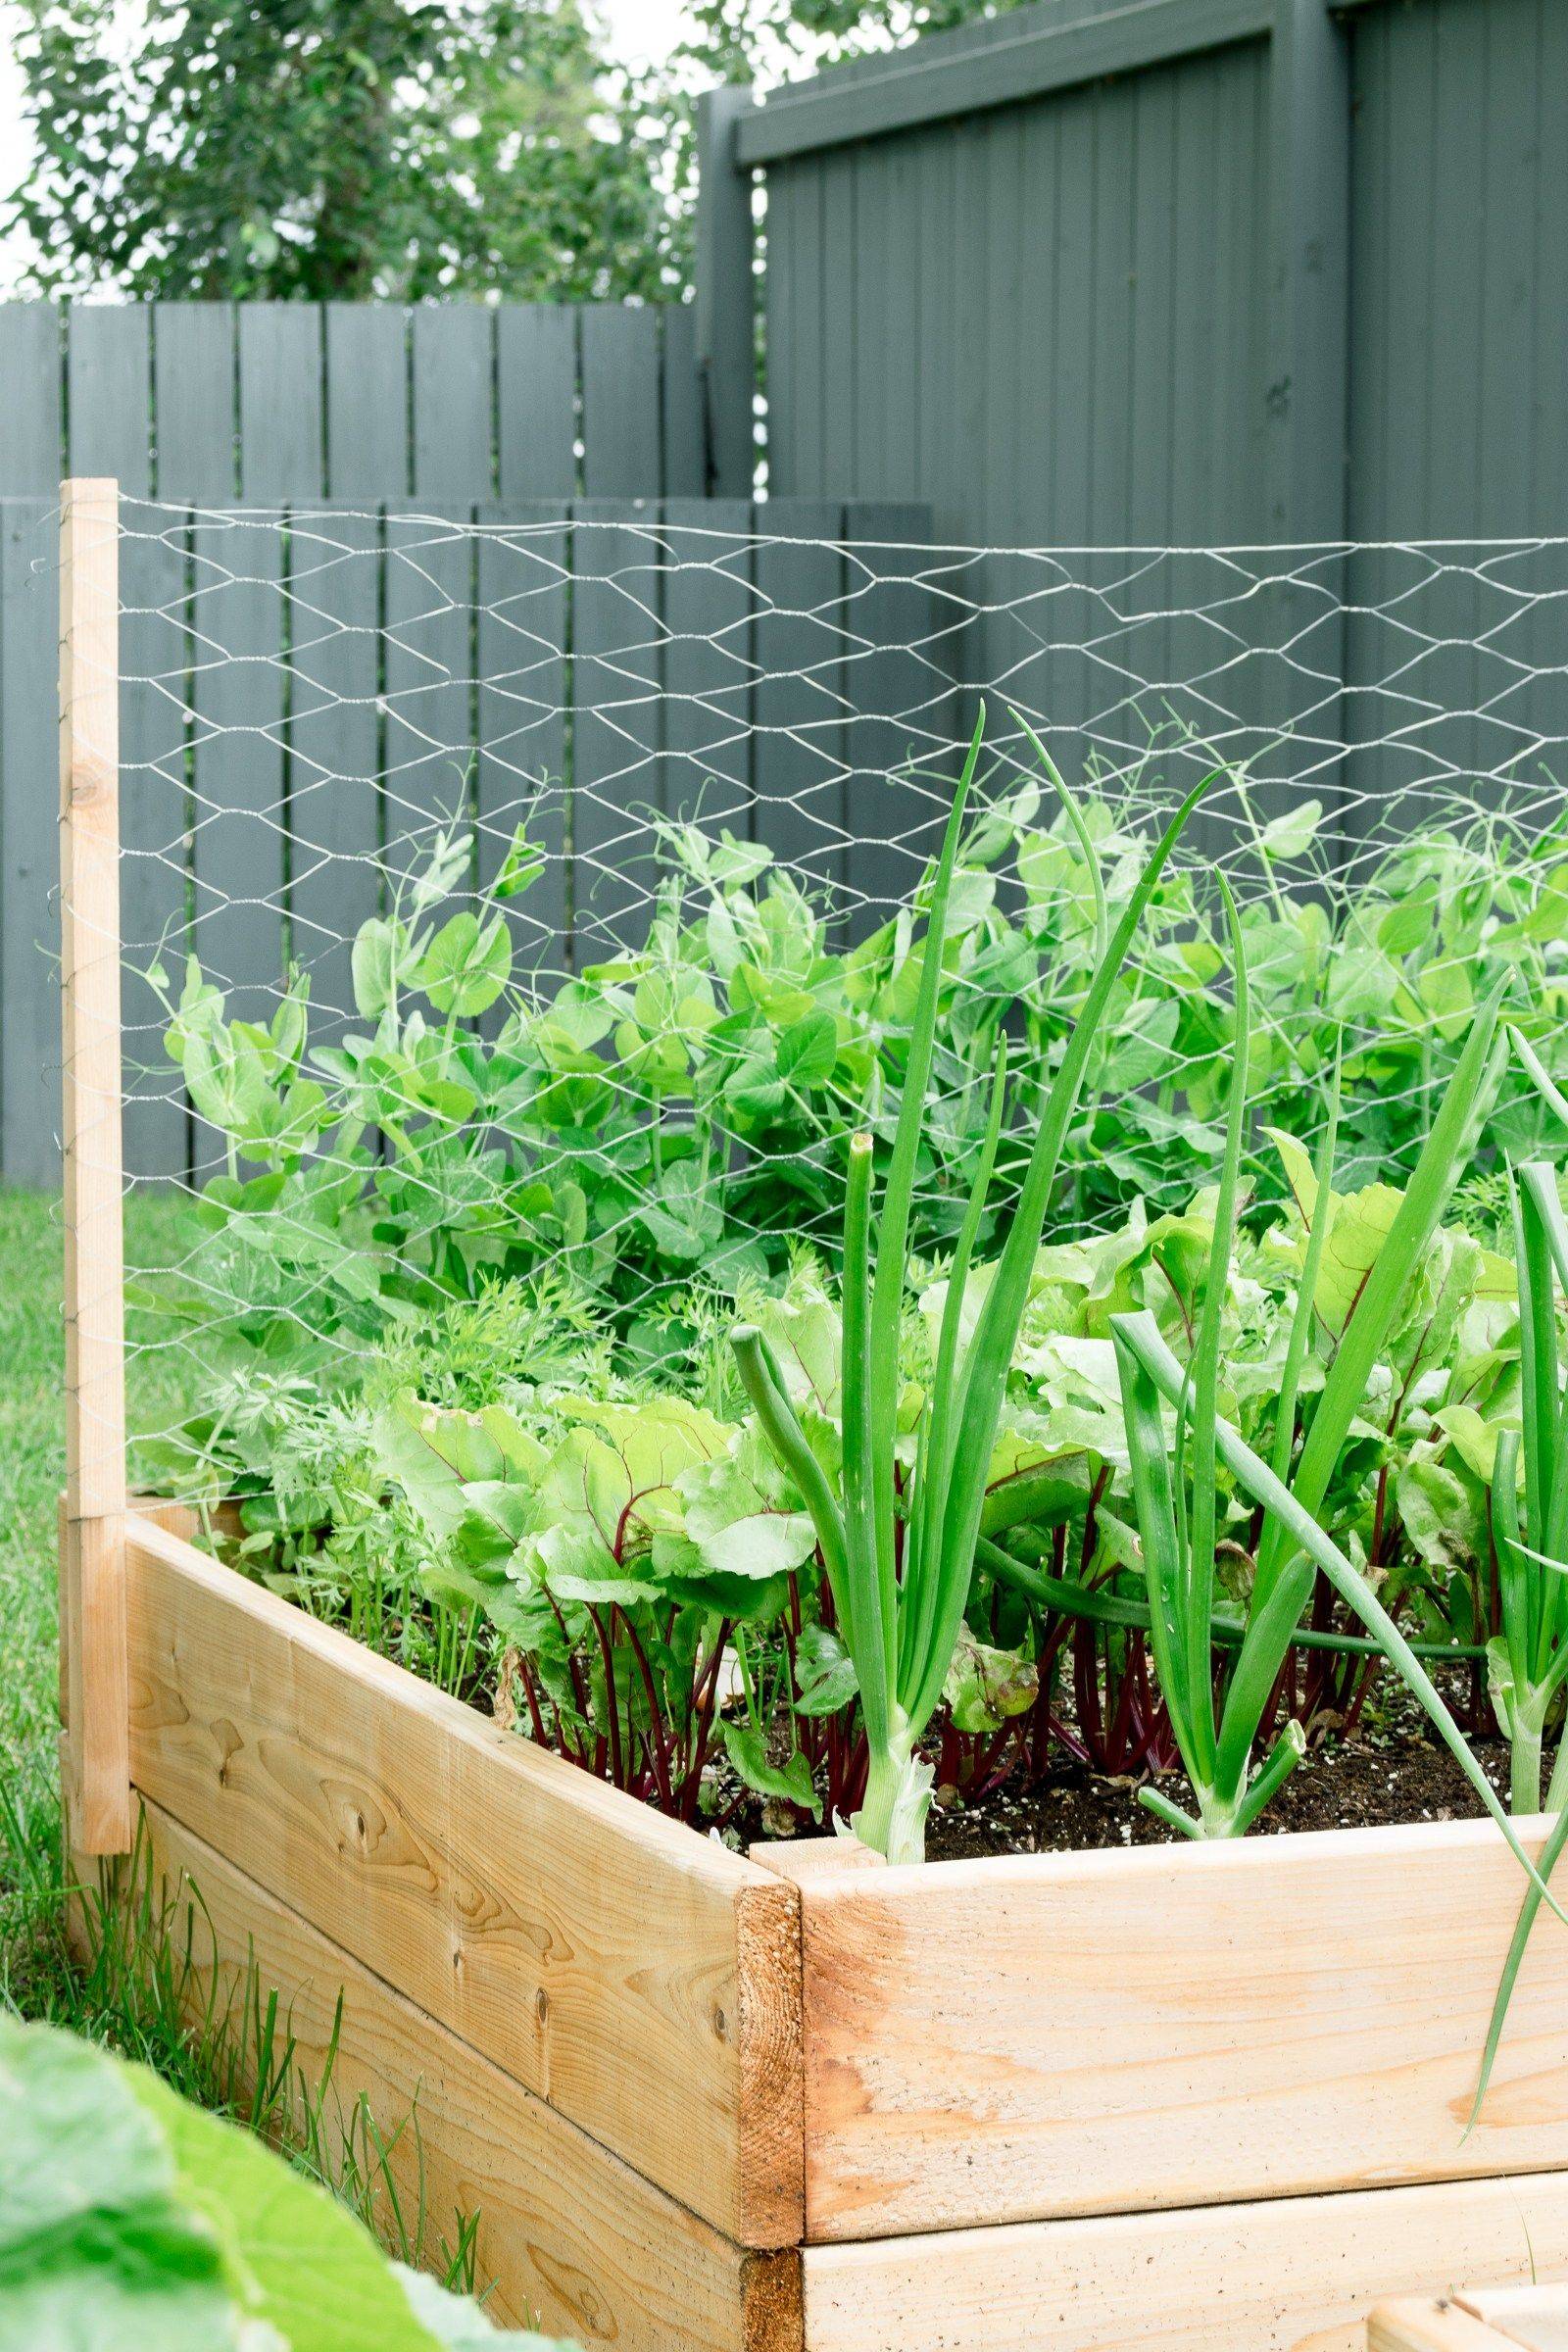 Your Own Hexagonal Garden Beds Diy Garden Projects